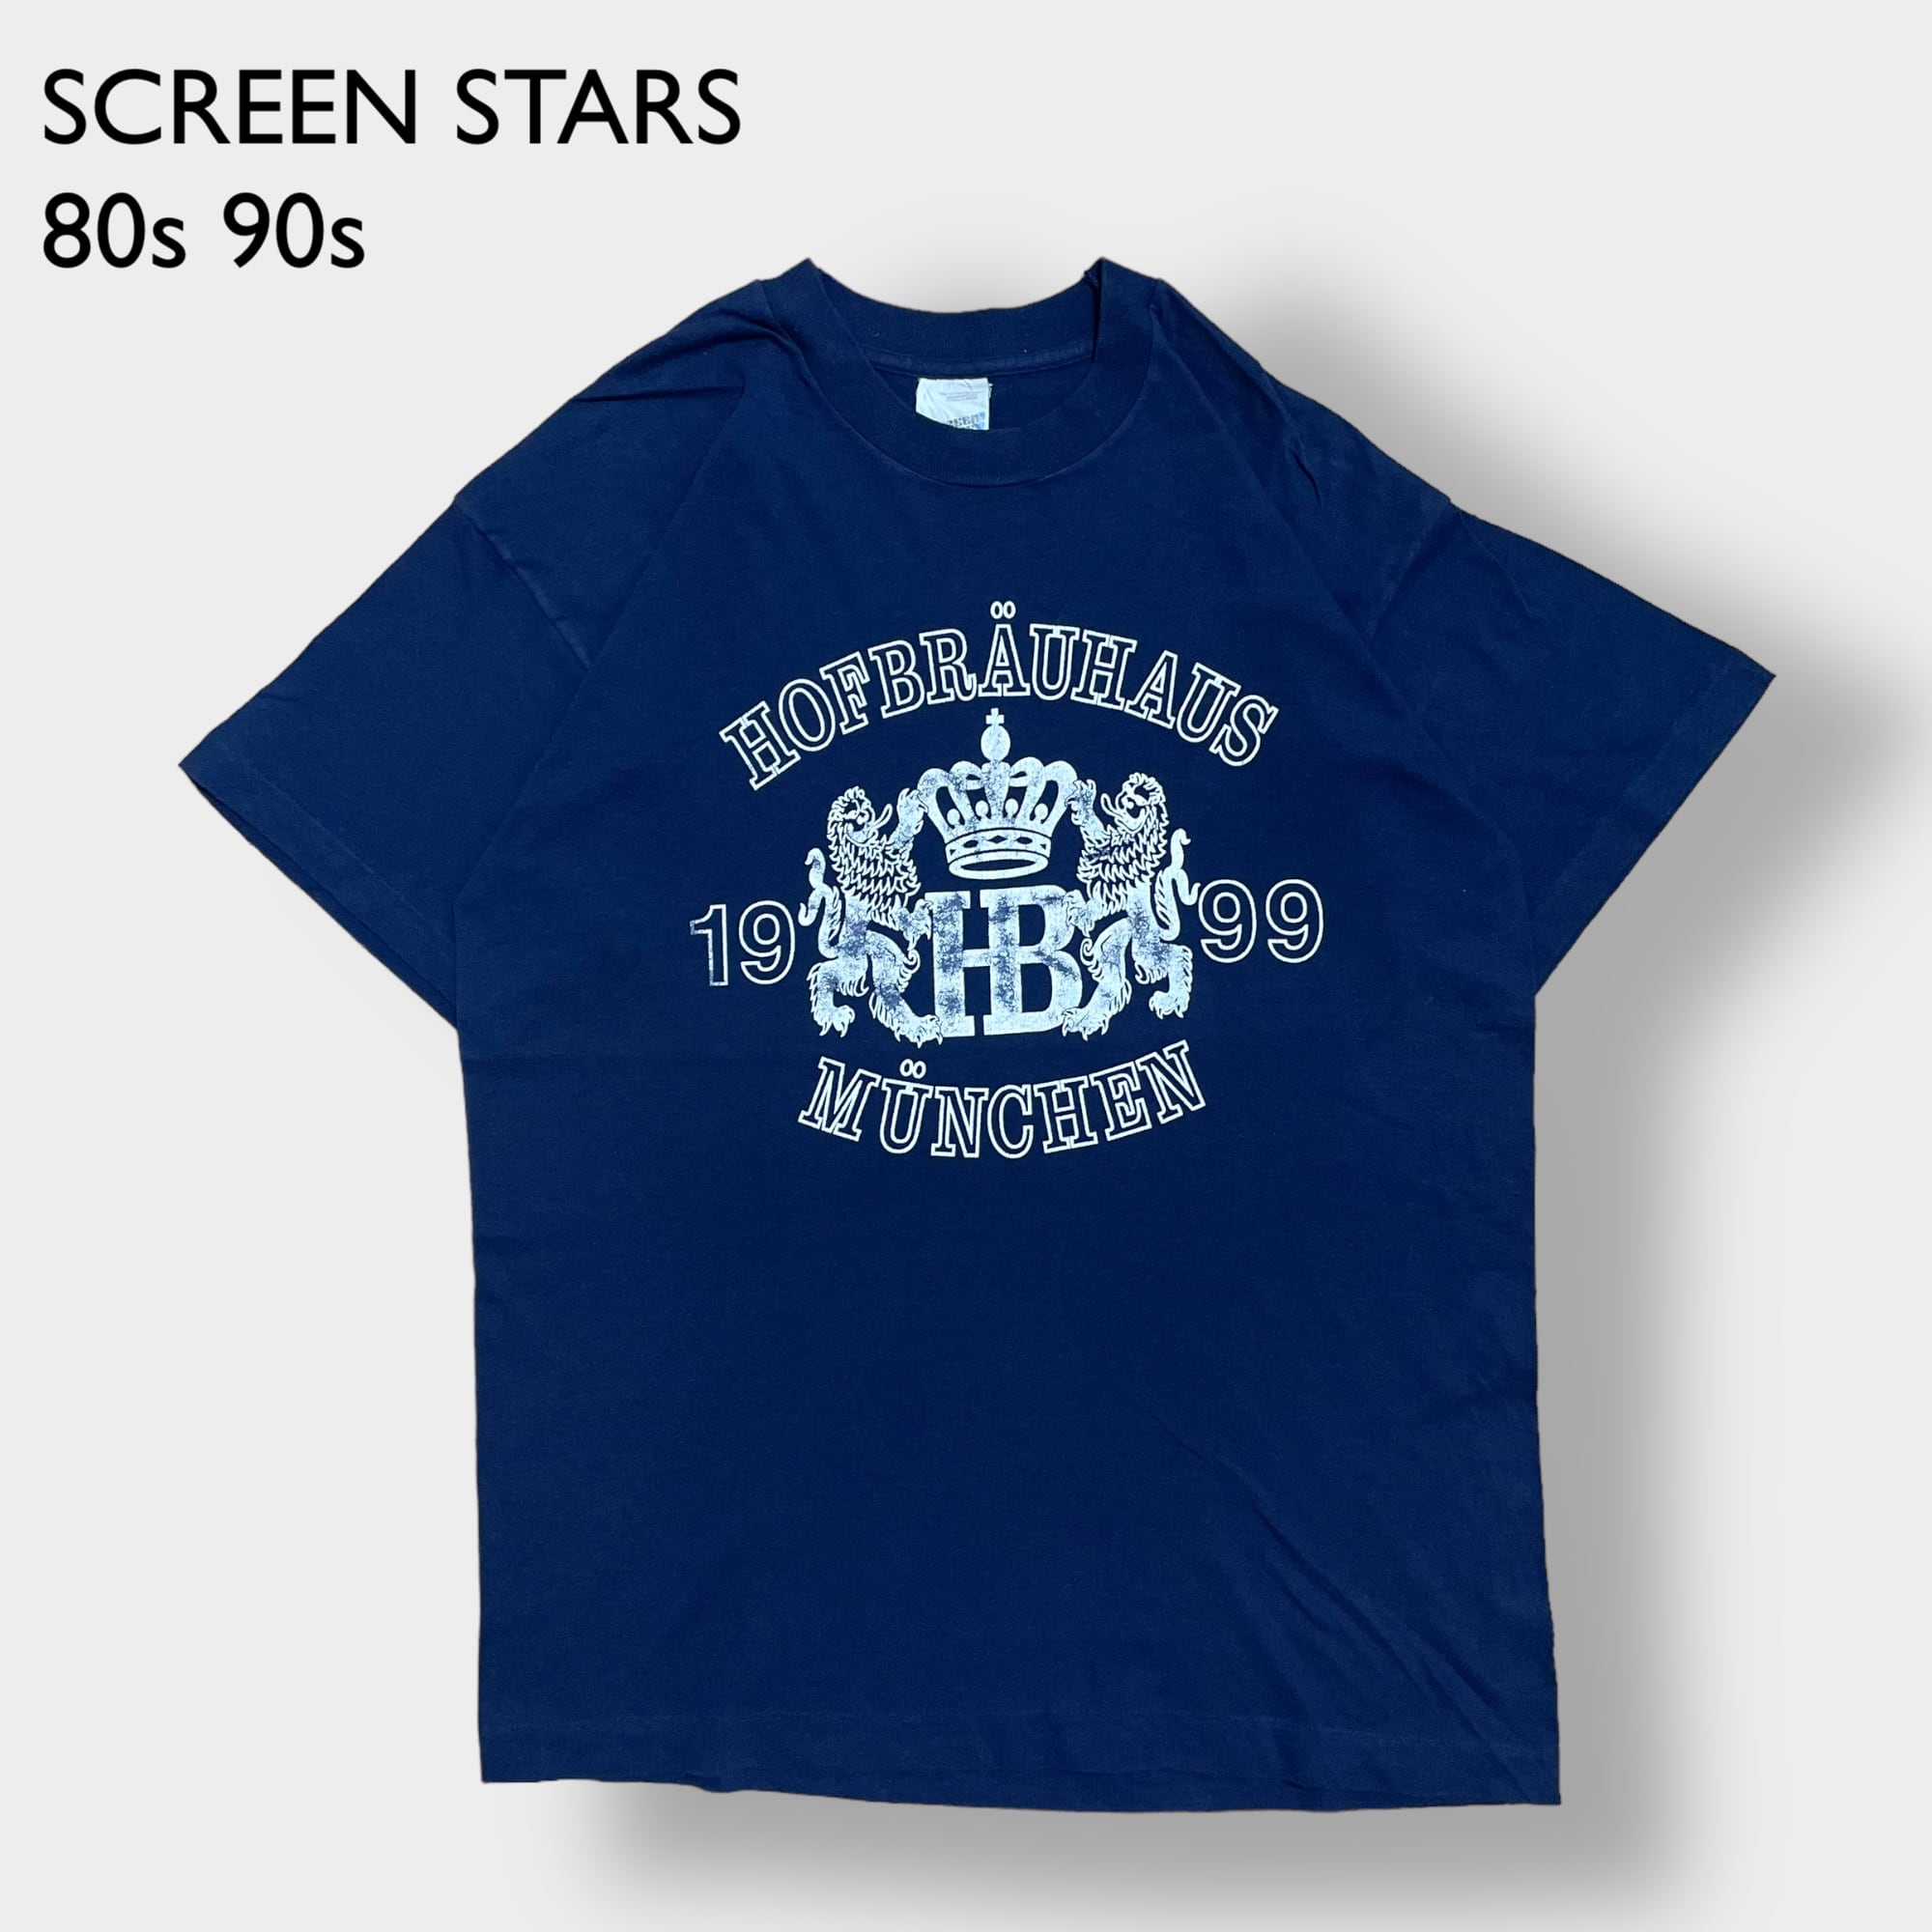 USA製 90s SCREEN STARS 長袖Tシャツ M シングルステッチ